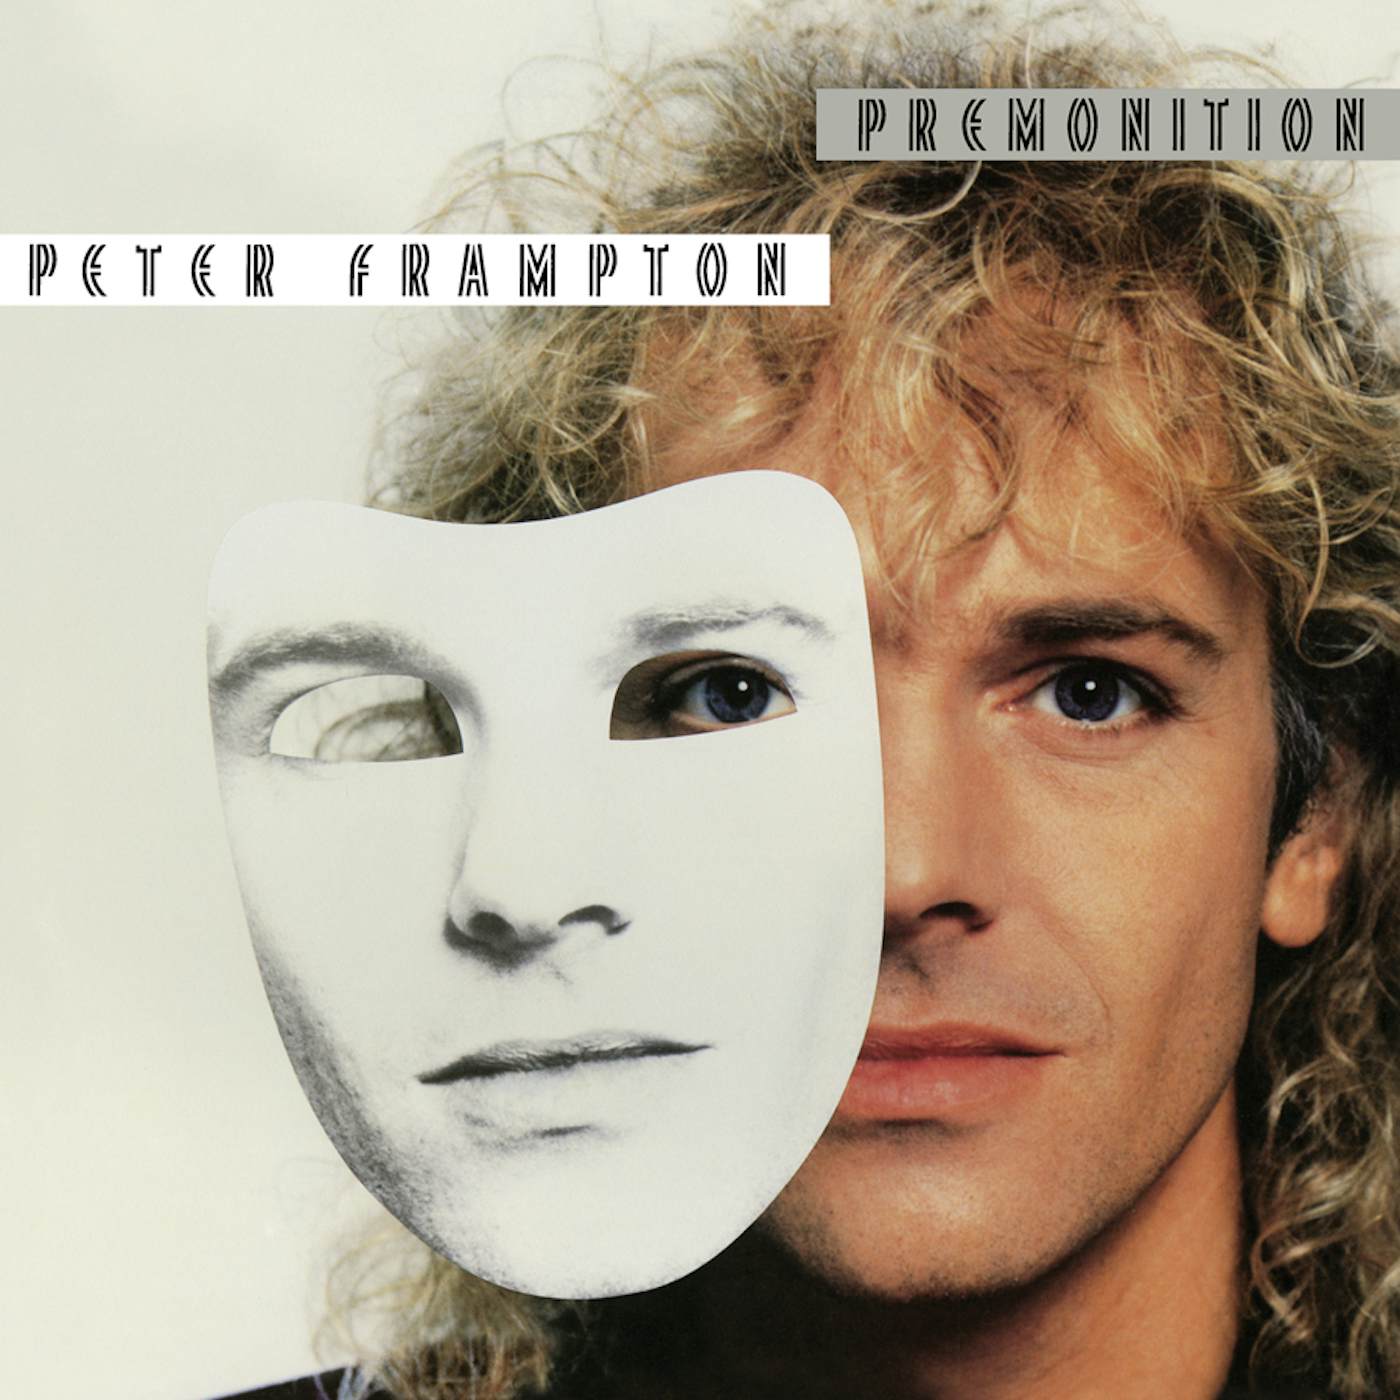 Peter Frampton PREMONITION CD